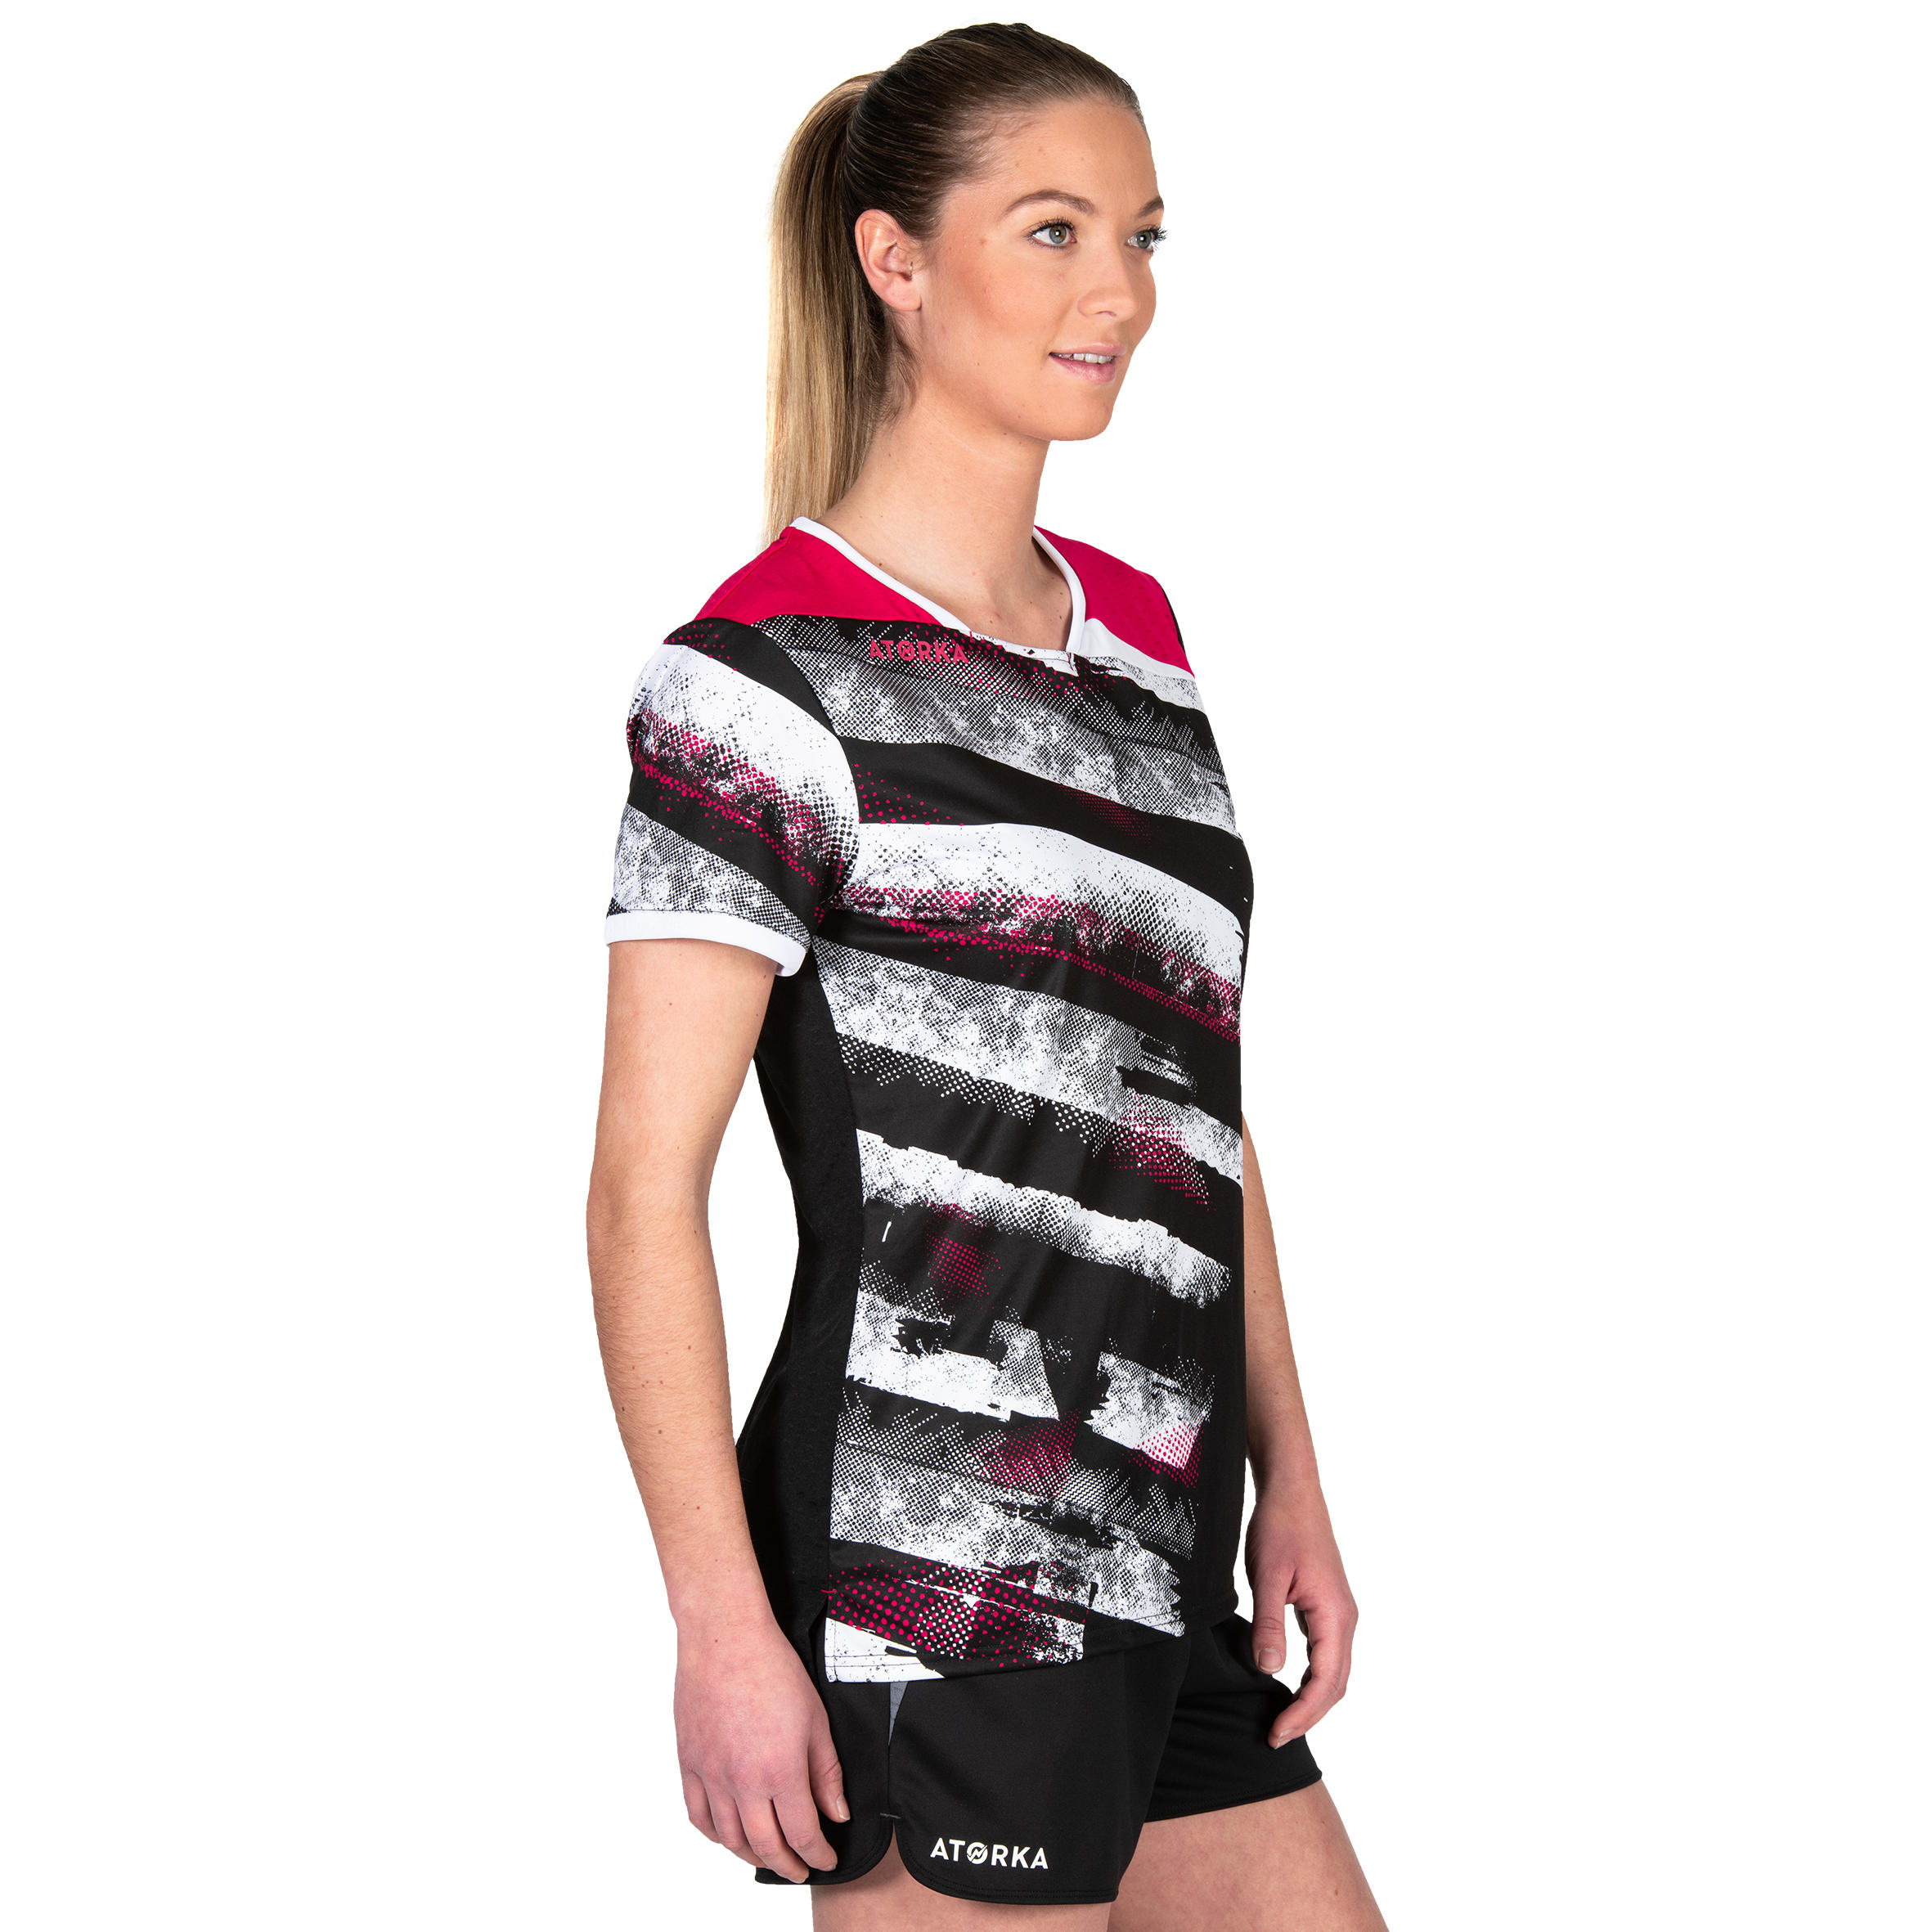 H500 Handball Jersey - Black/Pink 6/8